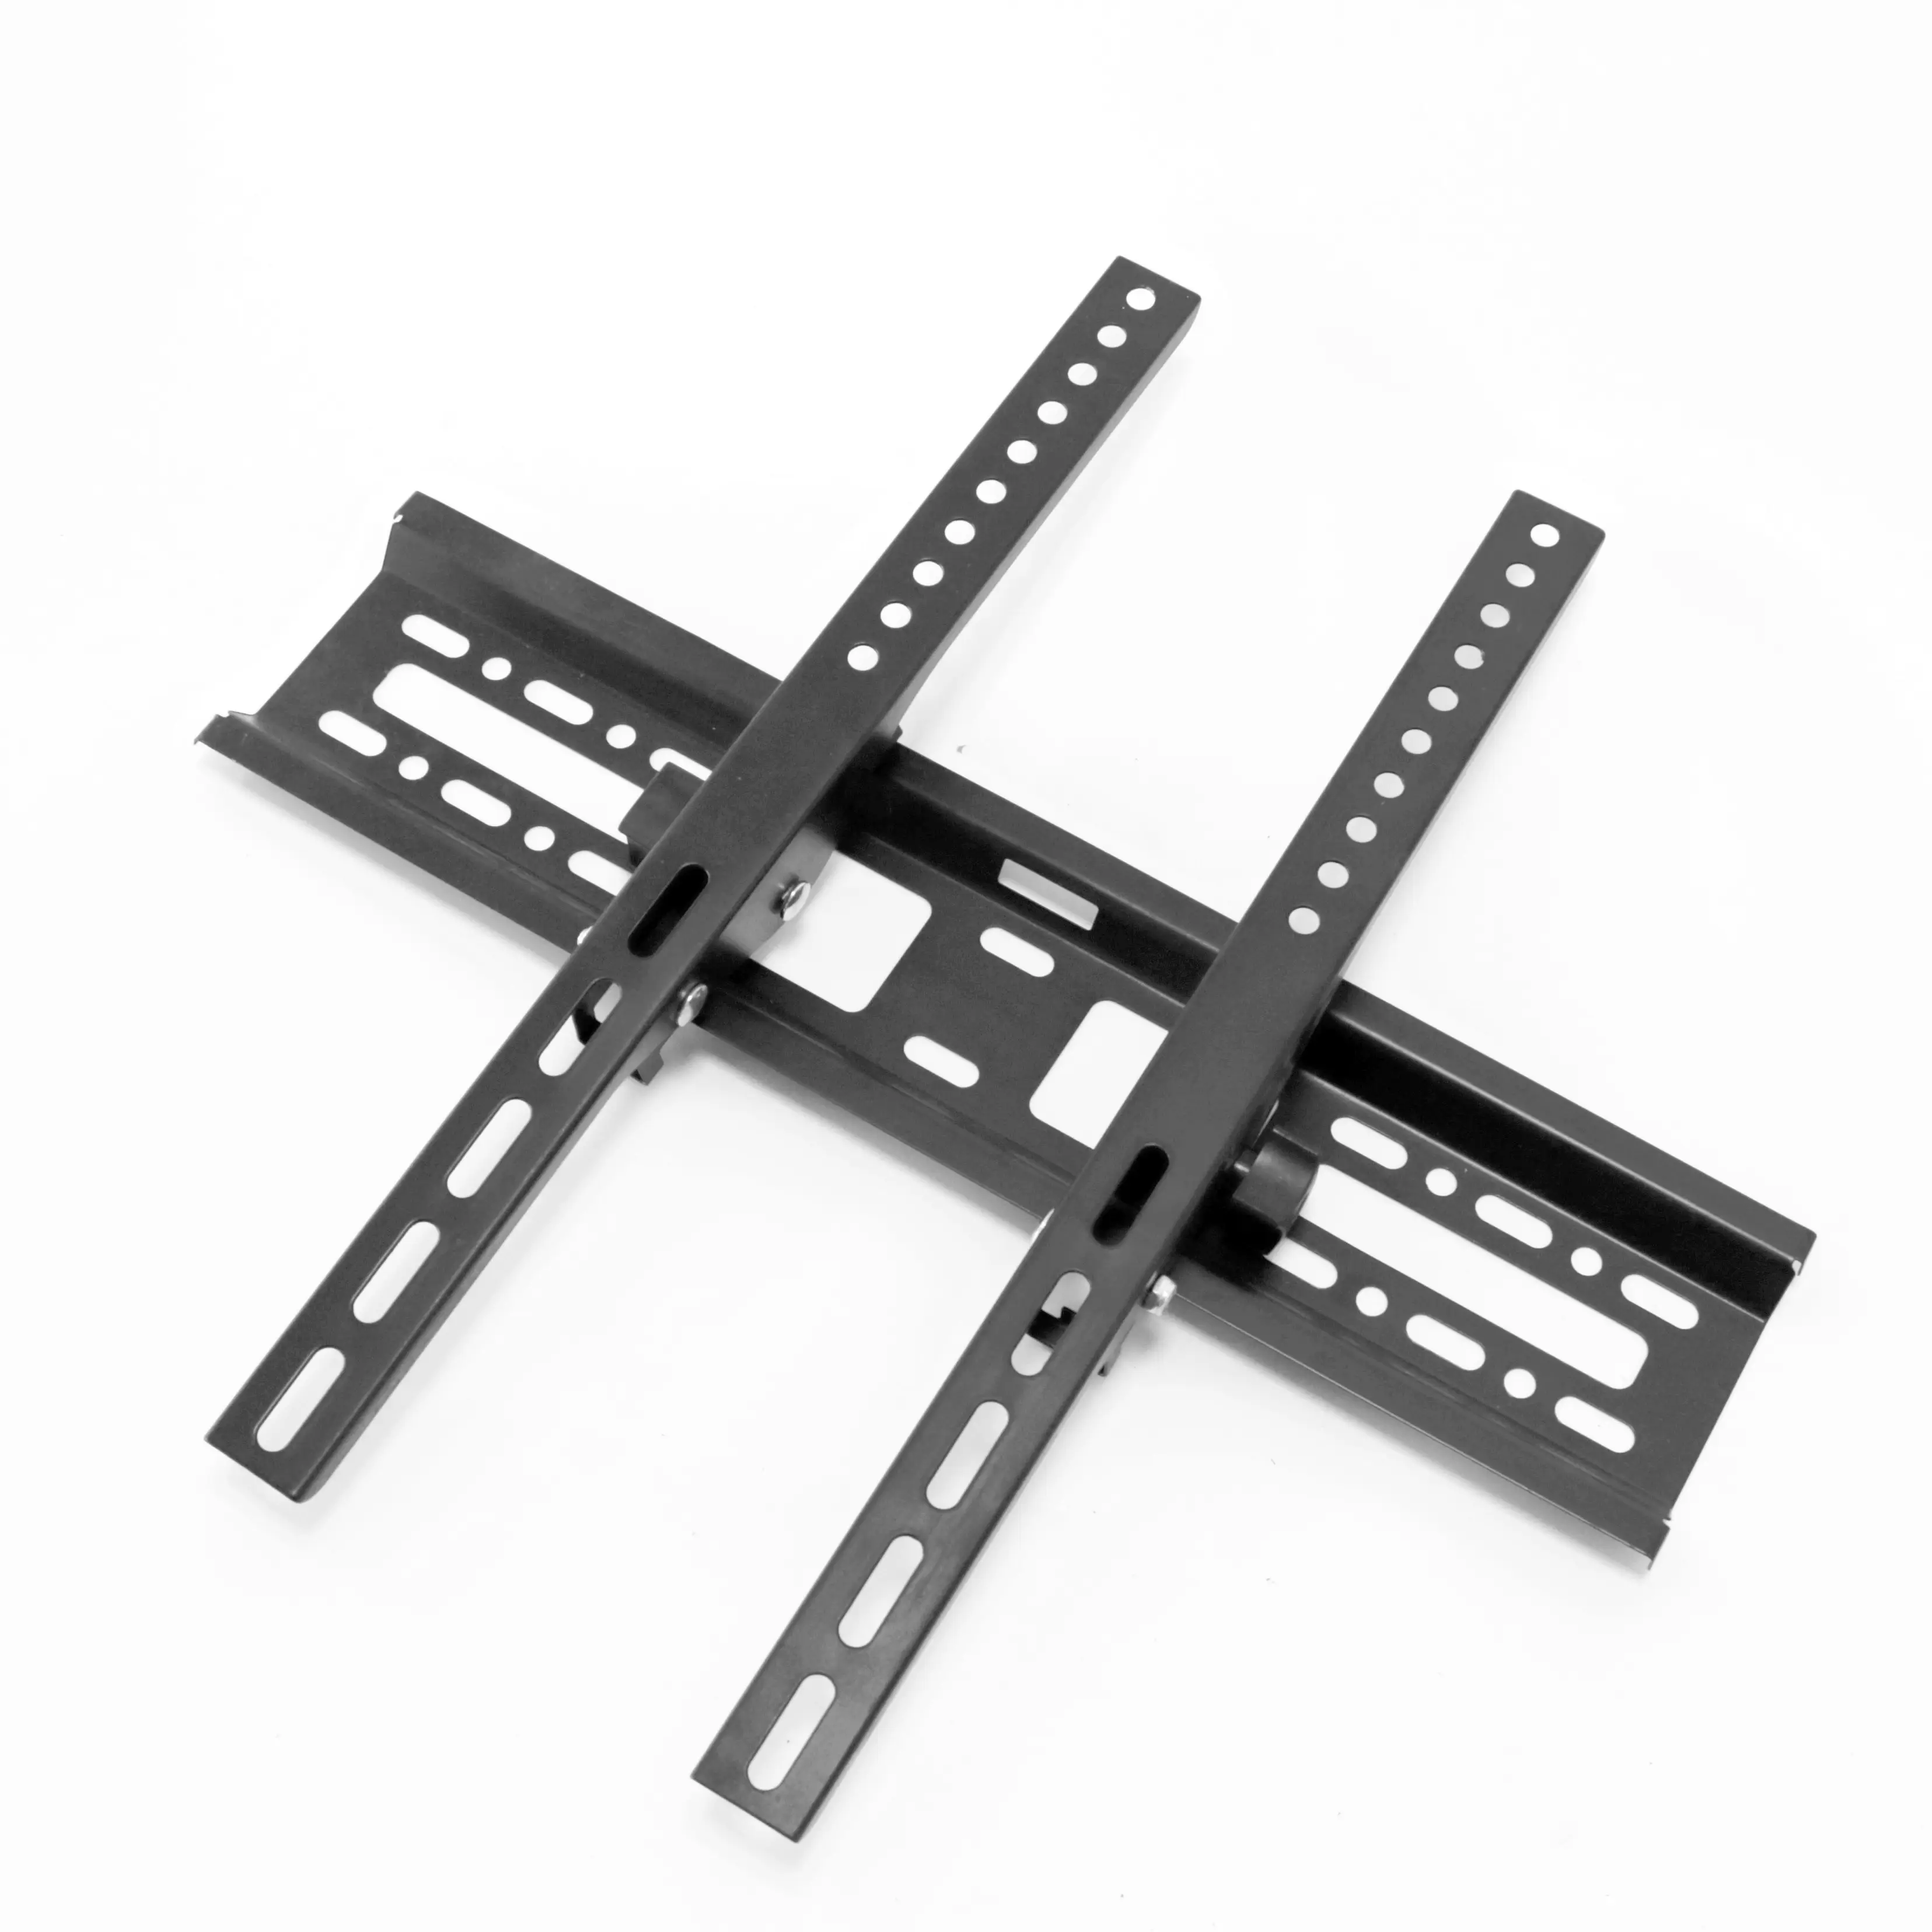 Diskon besar braket Tv dinding Universal untuk layar datar Lcd/Tv led braket dinding Tv sudut dapat disesuaikan